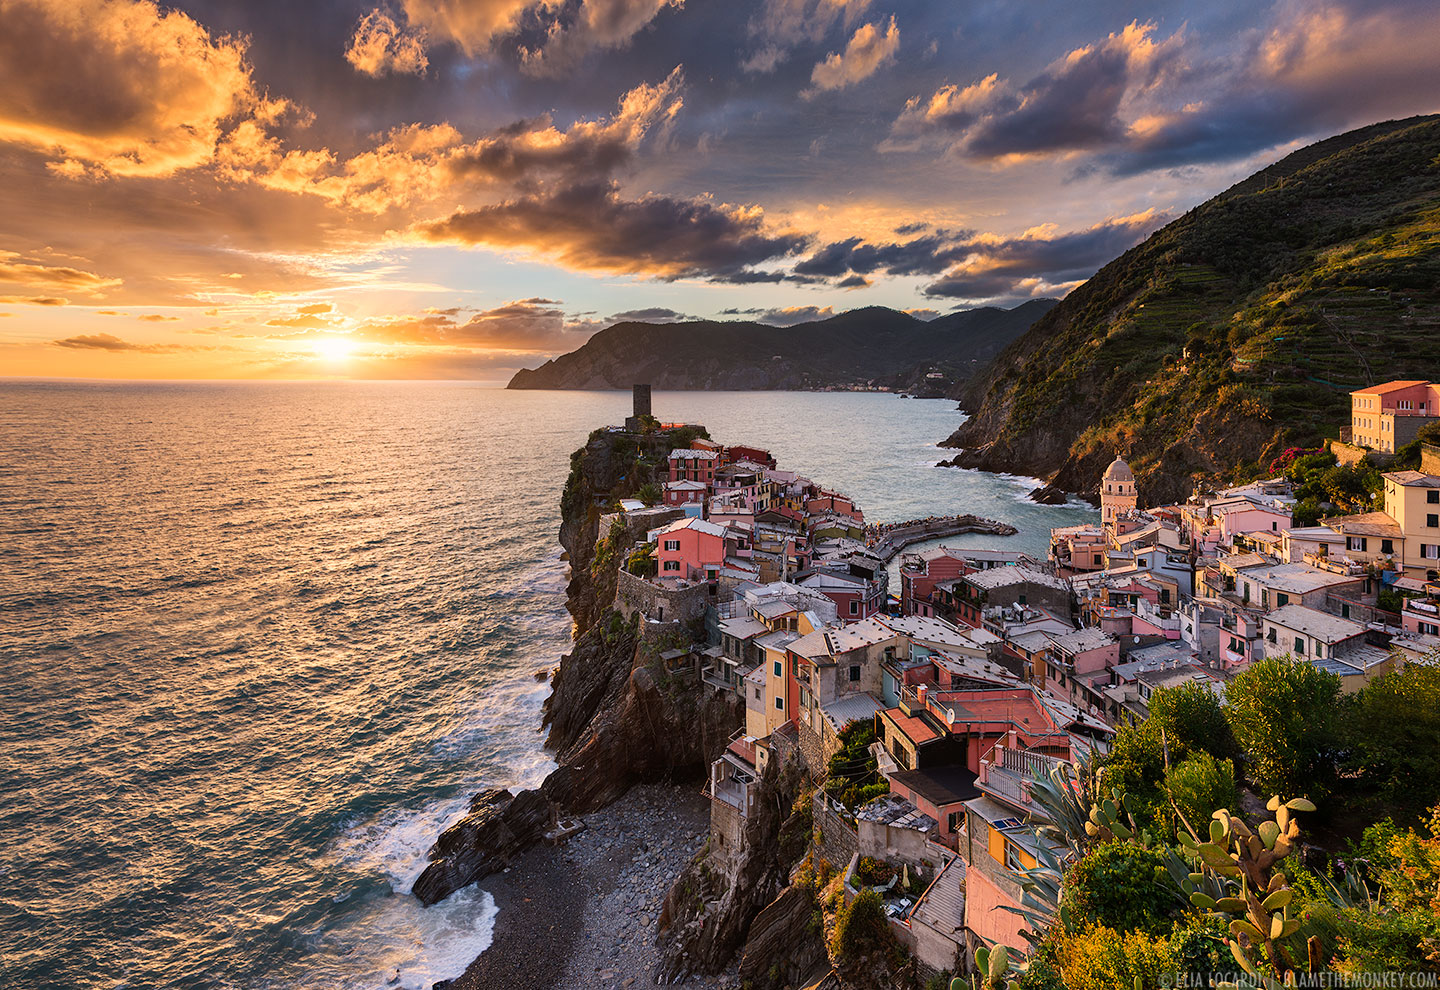 Song Of The Sea || Vernazza Cinque Terre Italy